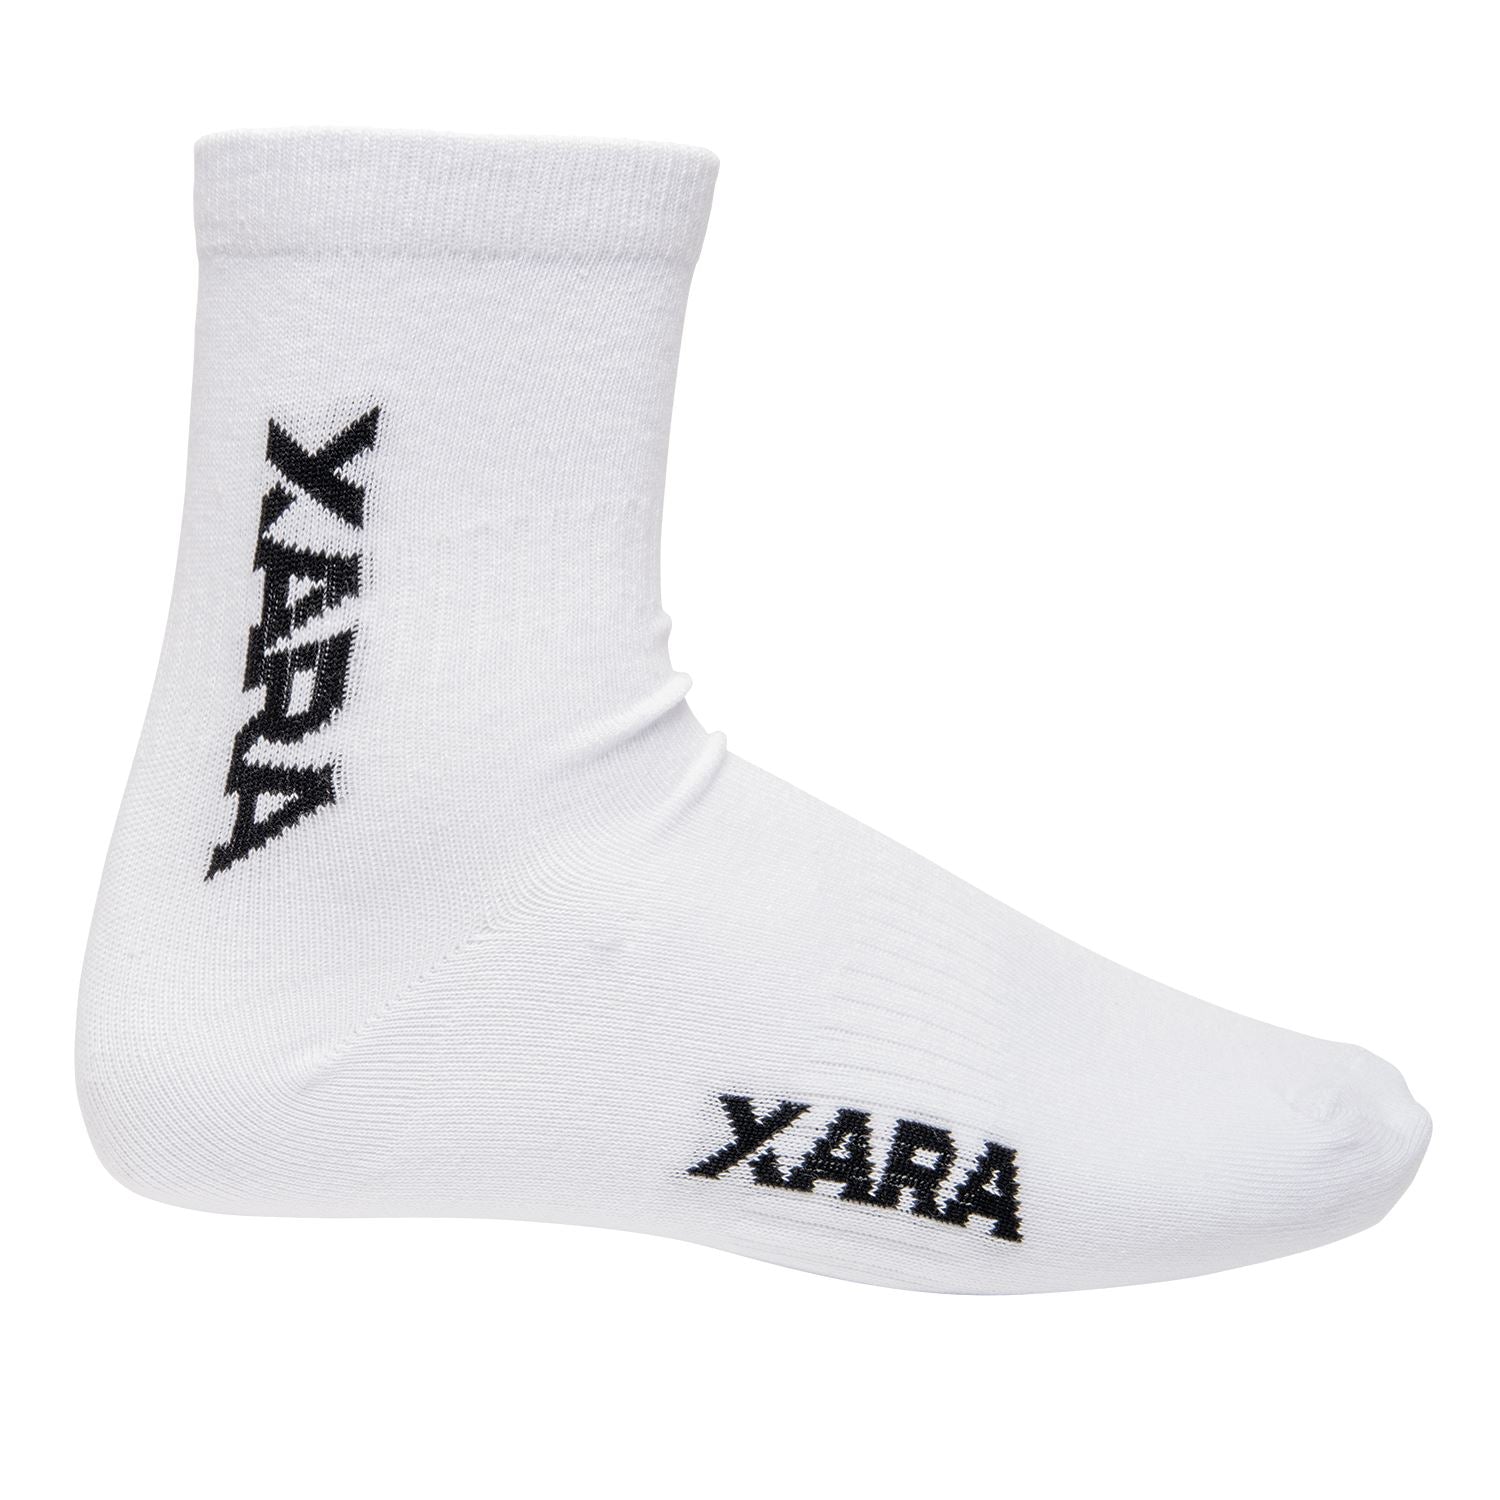 Training Sock Sock Xara Soccer White Youth 